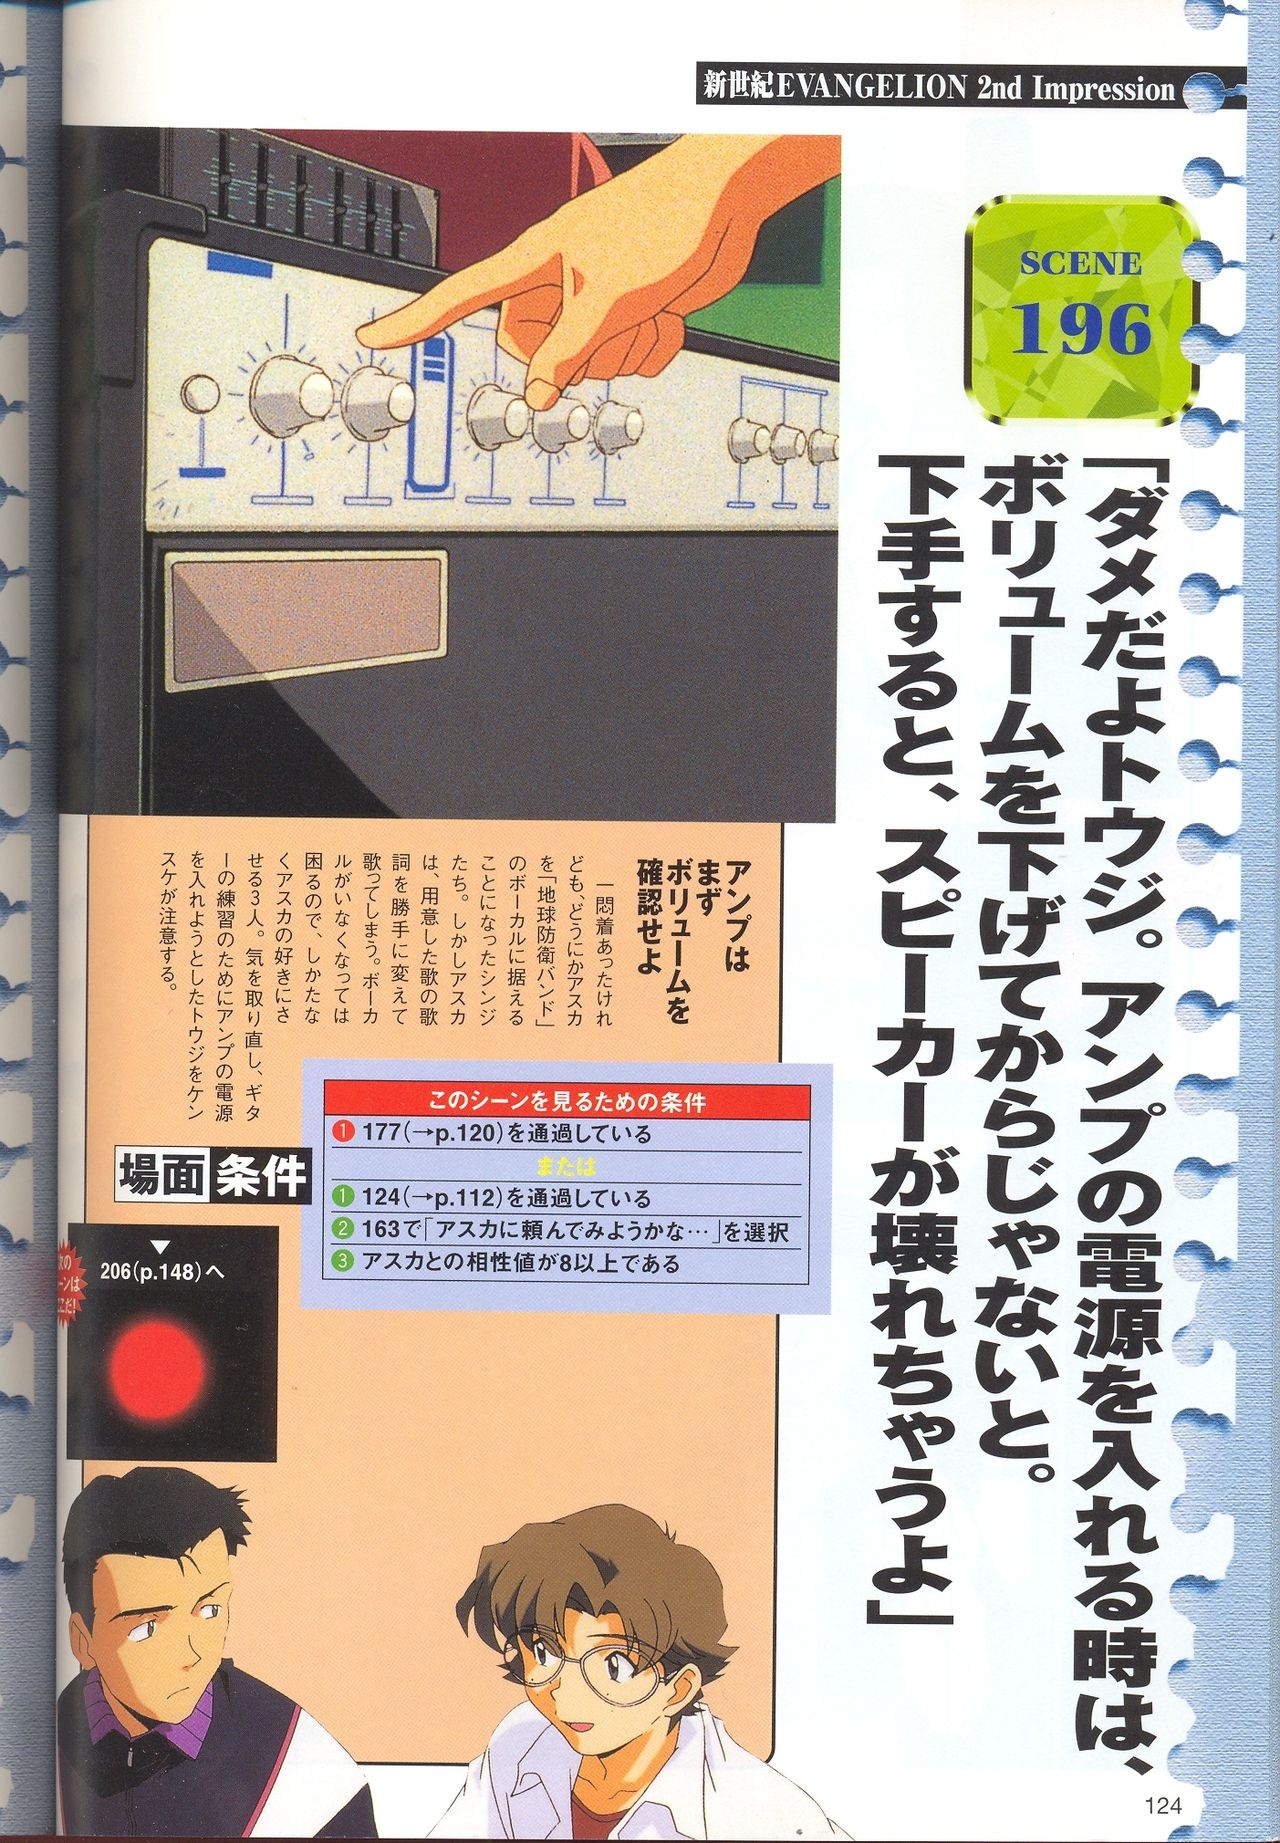 Neon Genesis Evangelion - 2nd Impression Sega Saturn Perfect Guide 123